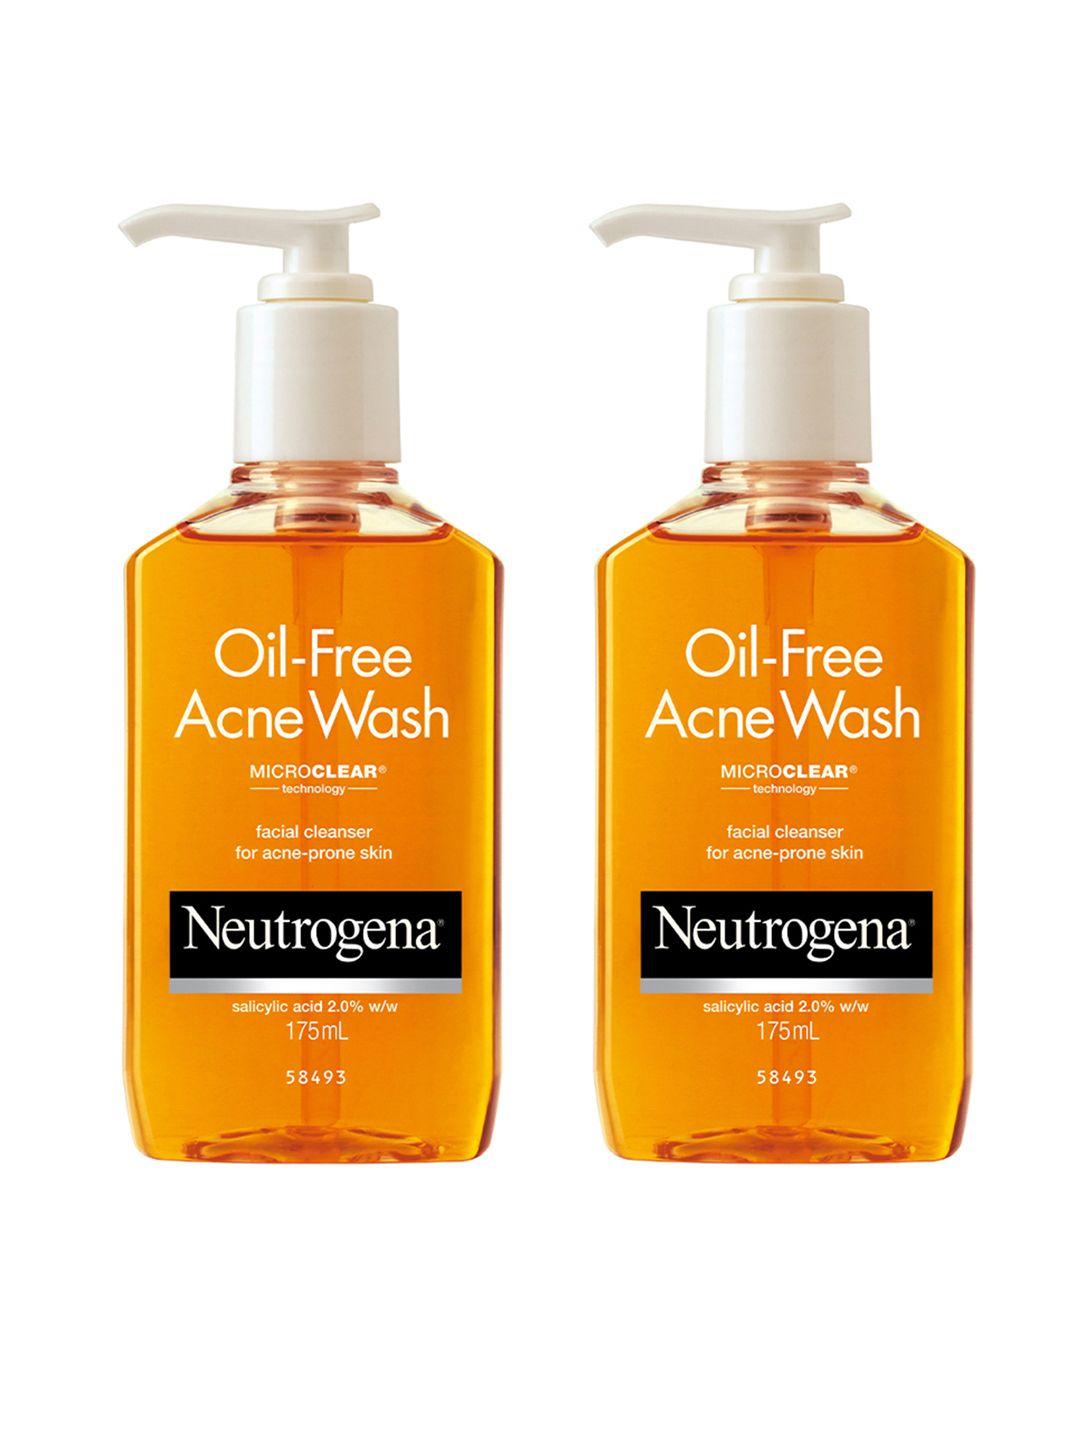 neutrogena set of 2 oil-free acne face wash for acne-prone skin - 175ml each